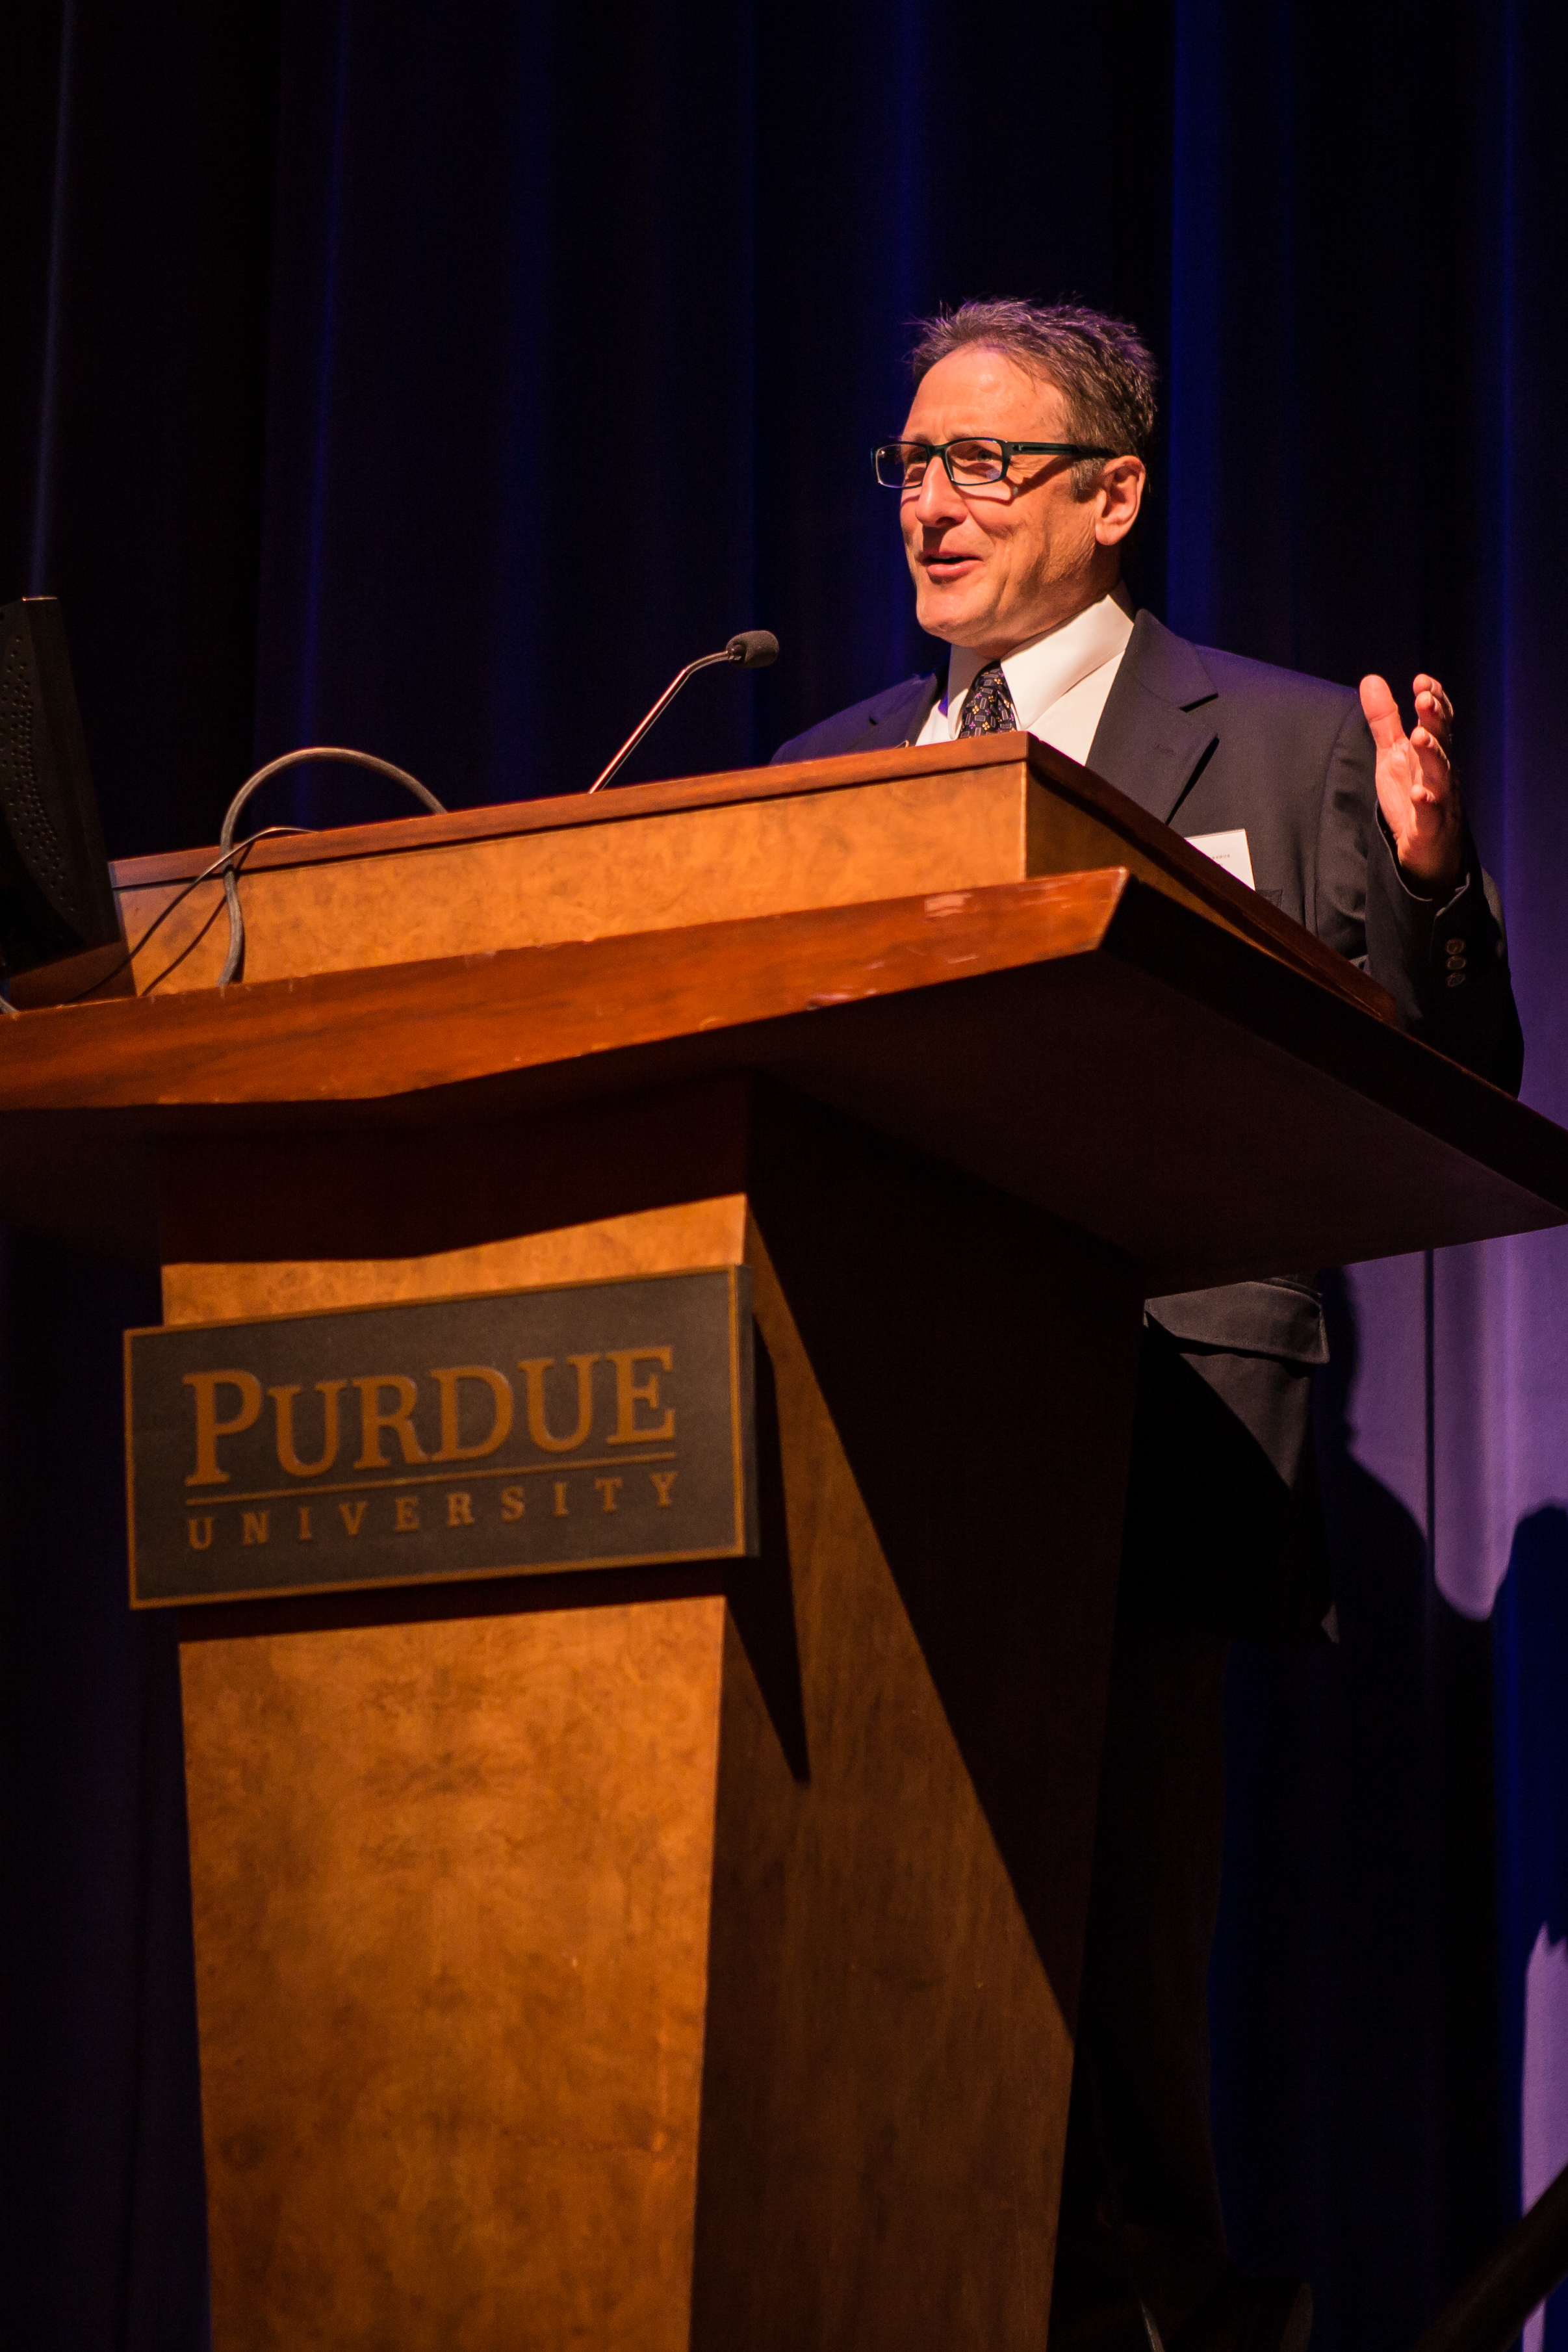 Professor Ken Foster, Department Chair of Agricultural Economics, Purdue University